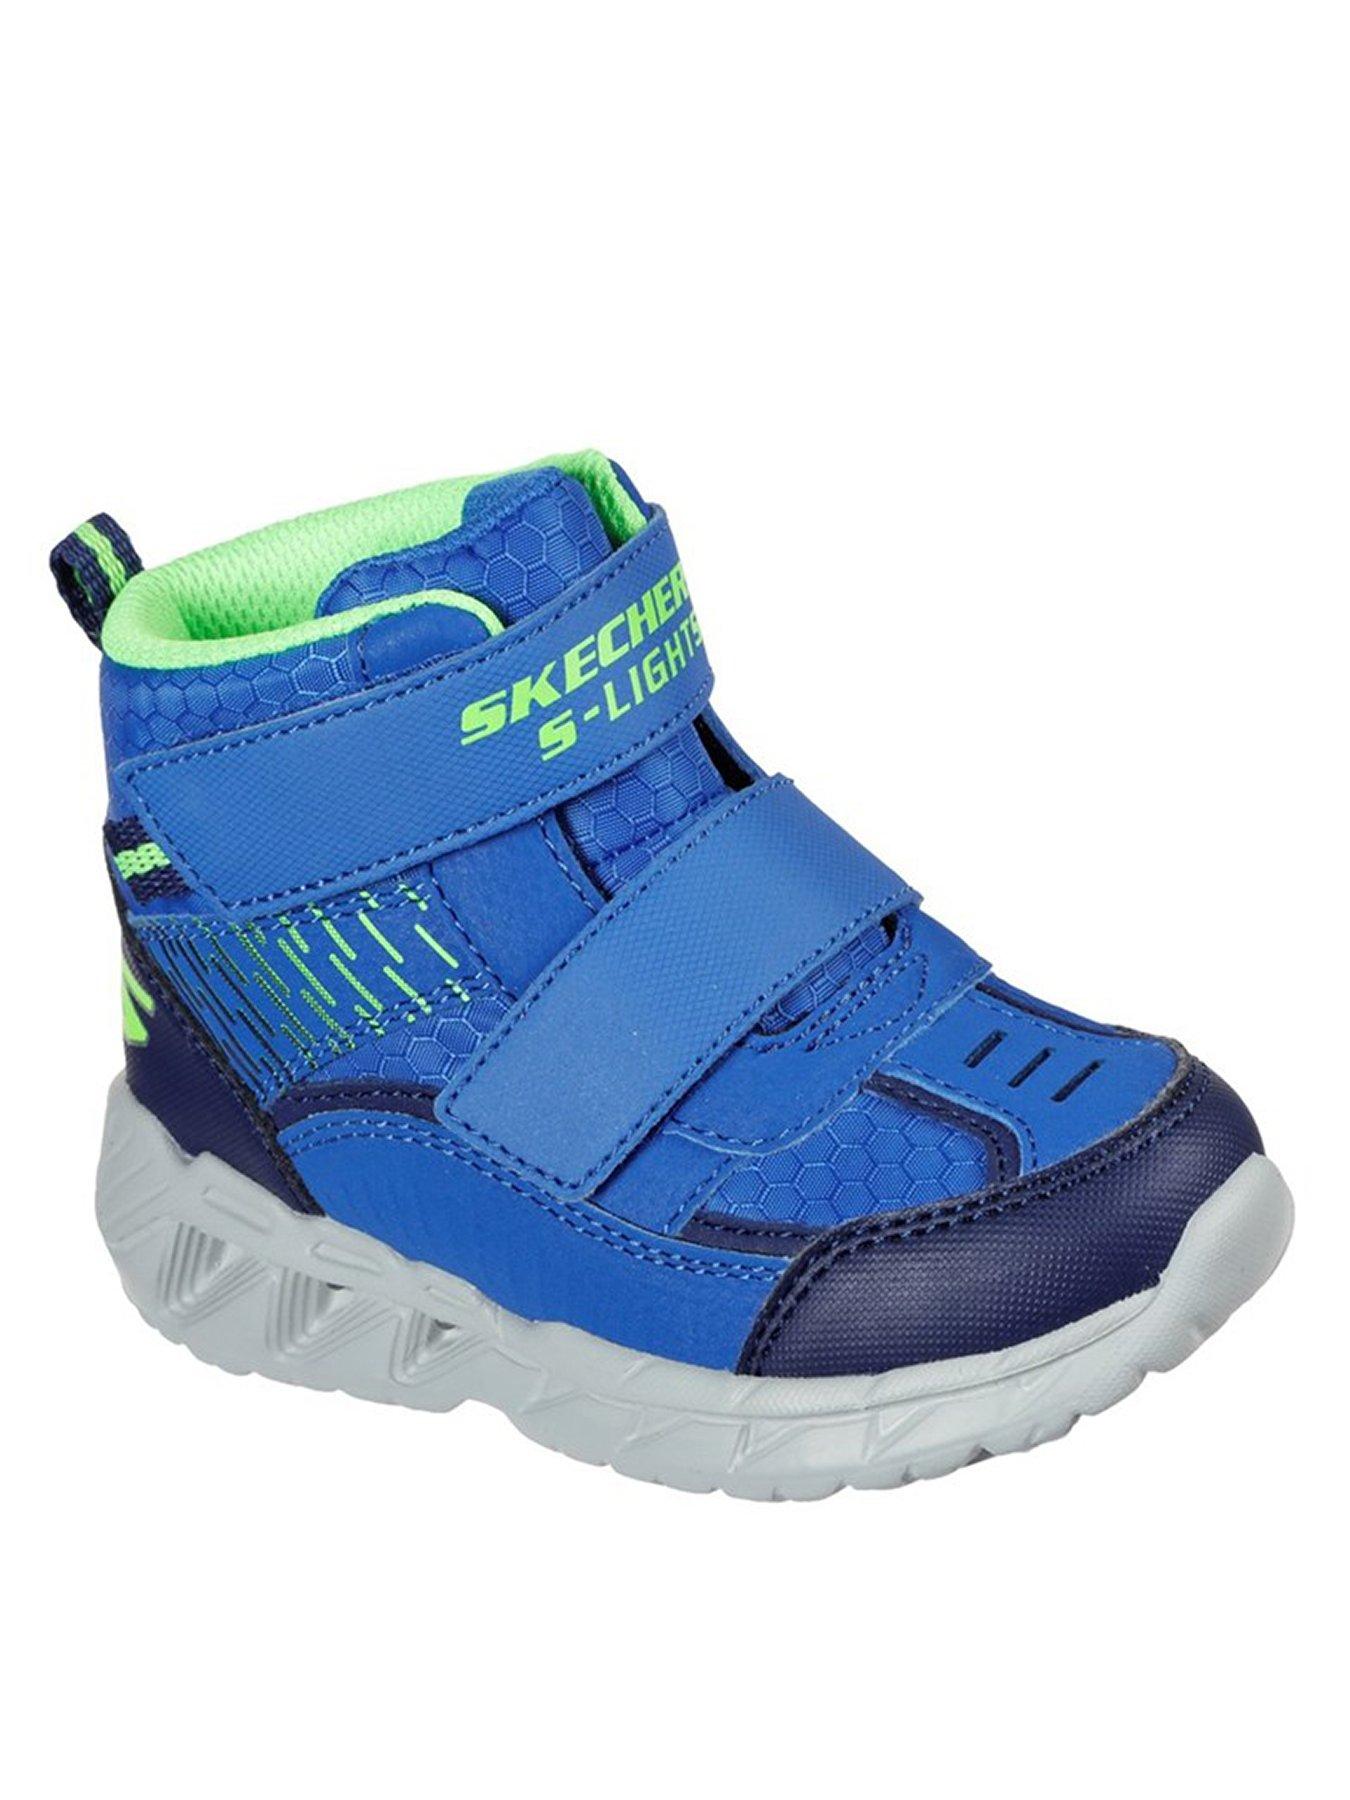 Kids Magna-lights Boots - Blue